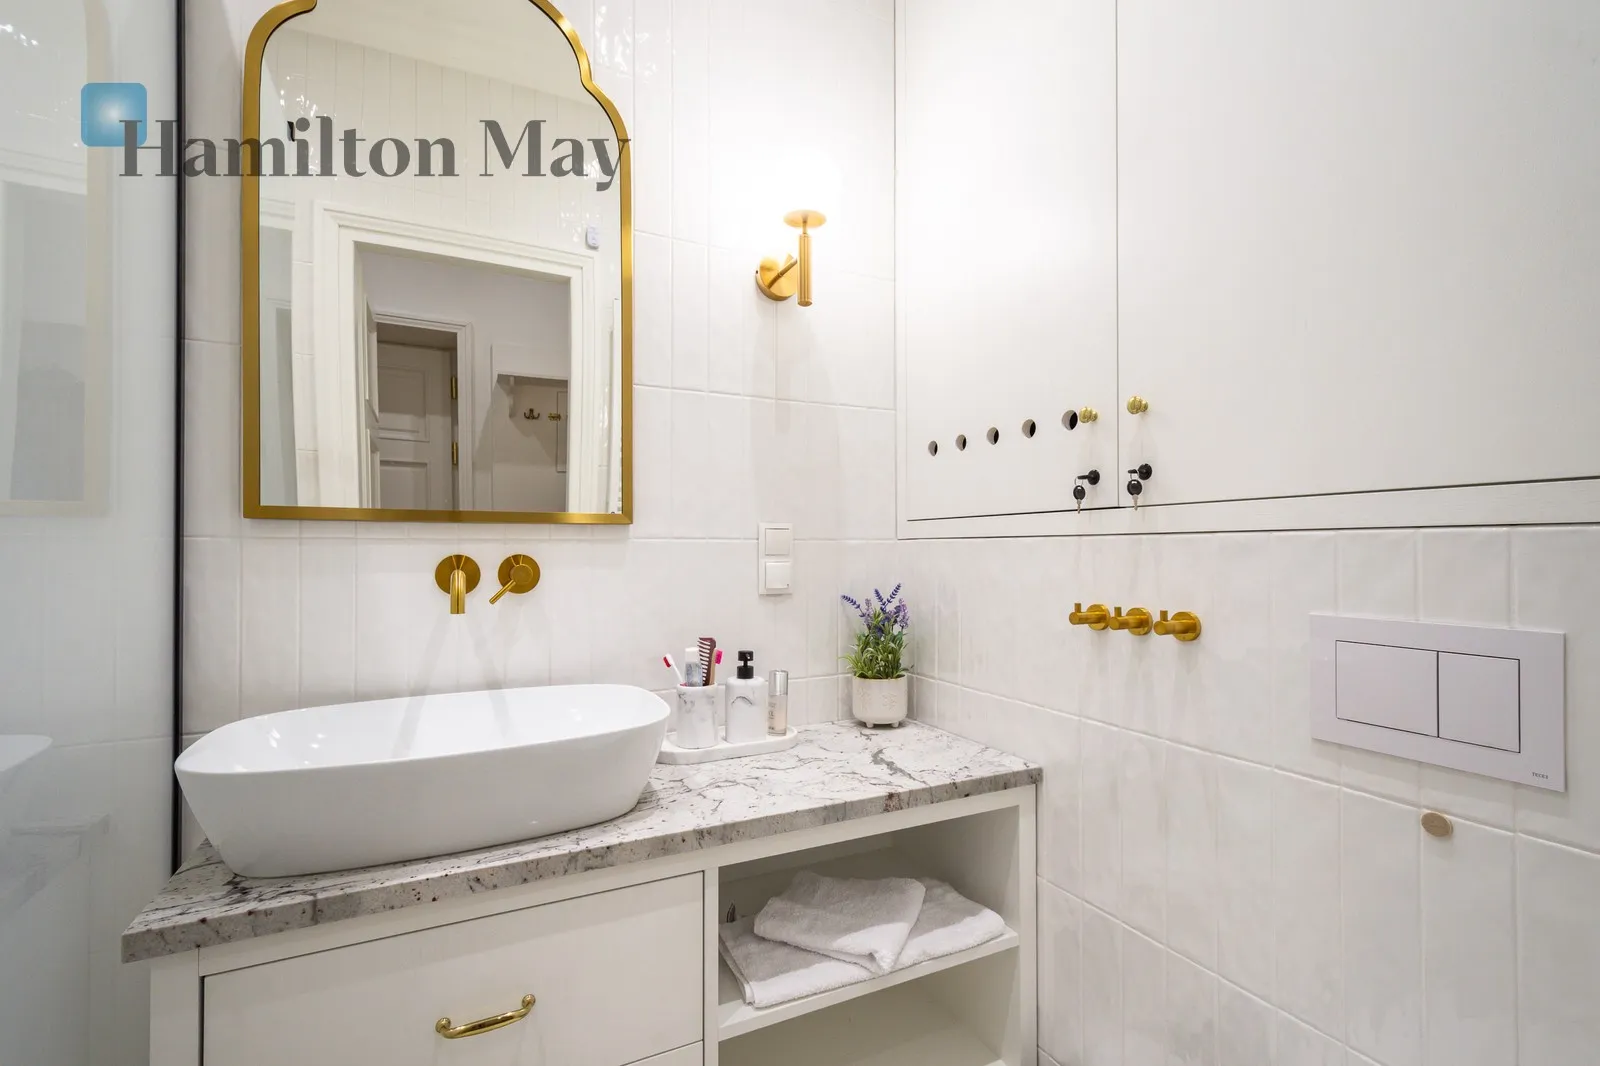 Bedrooms: 2 Bathrooms: 1 Size: 60m2 Price/m2: 97 PLN